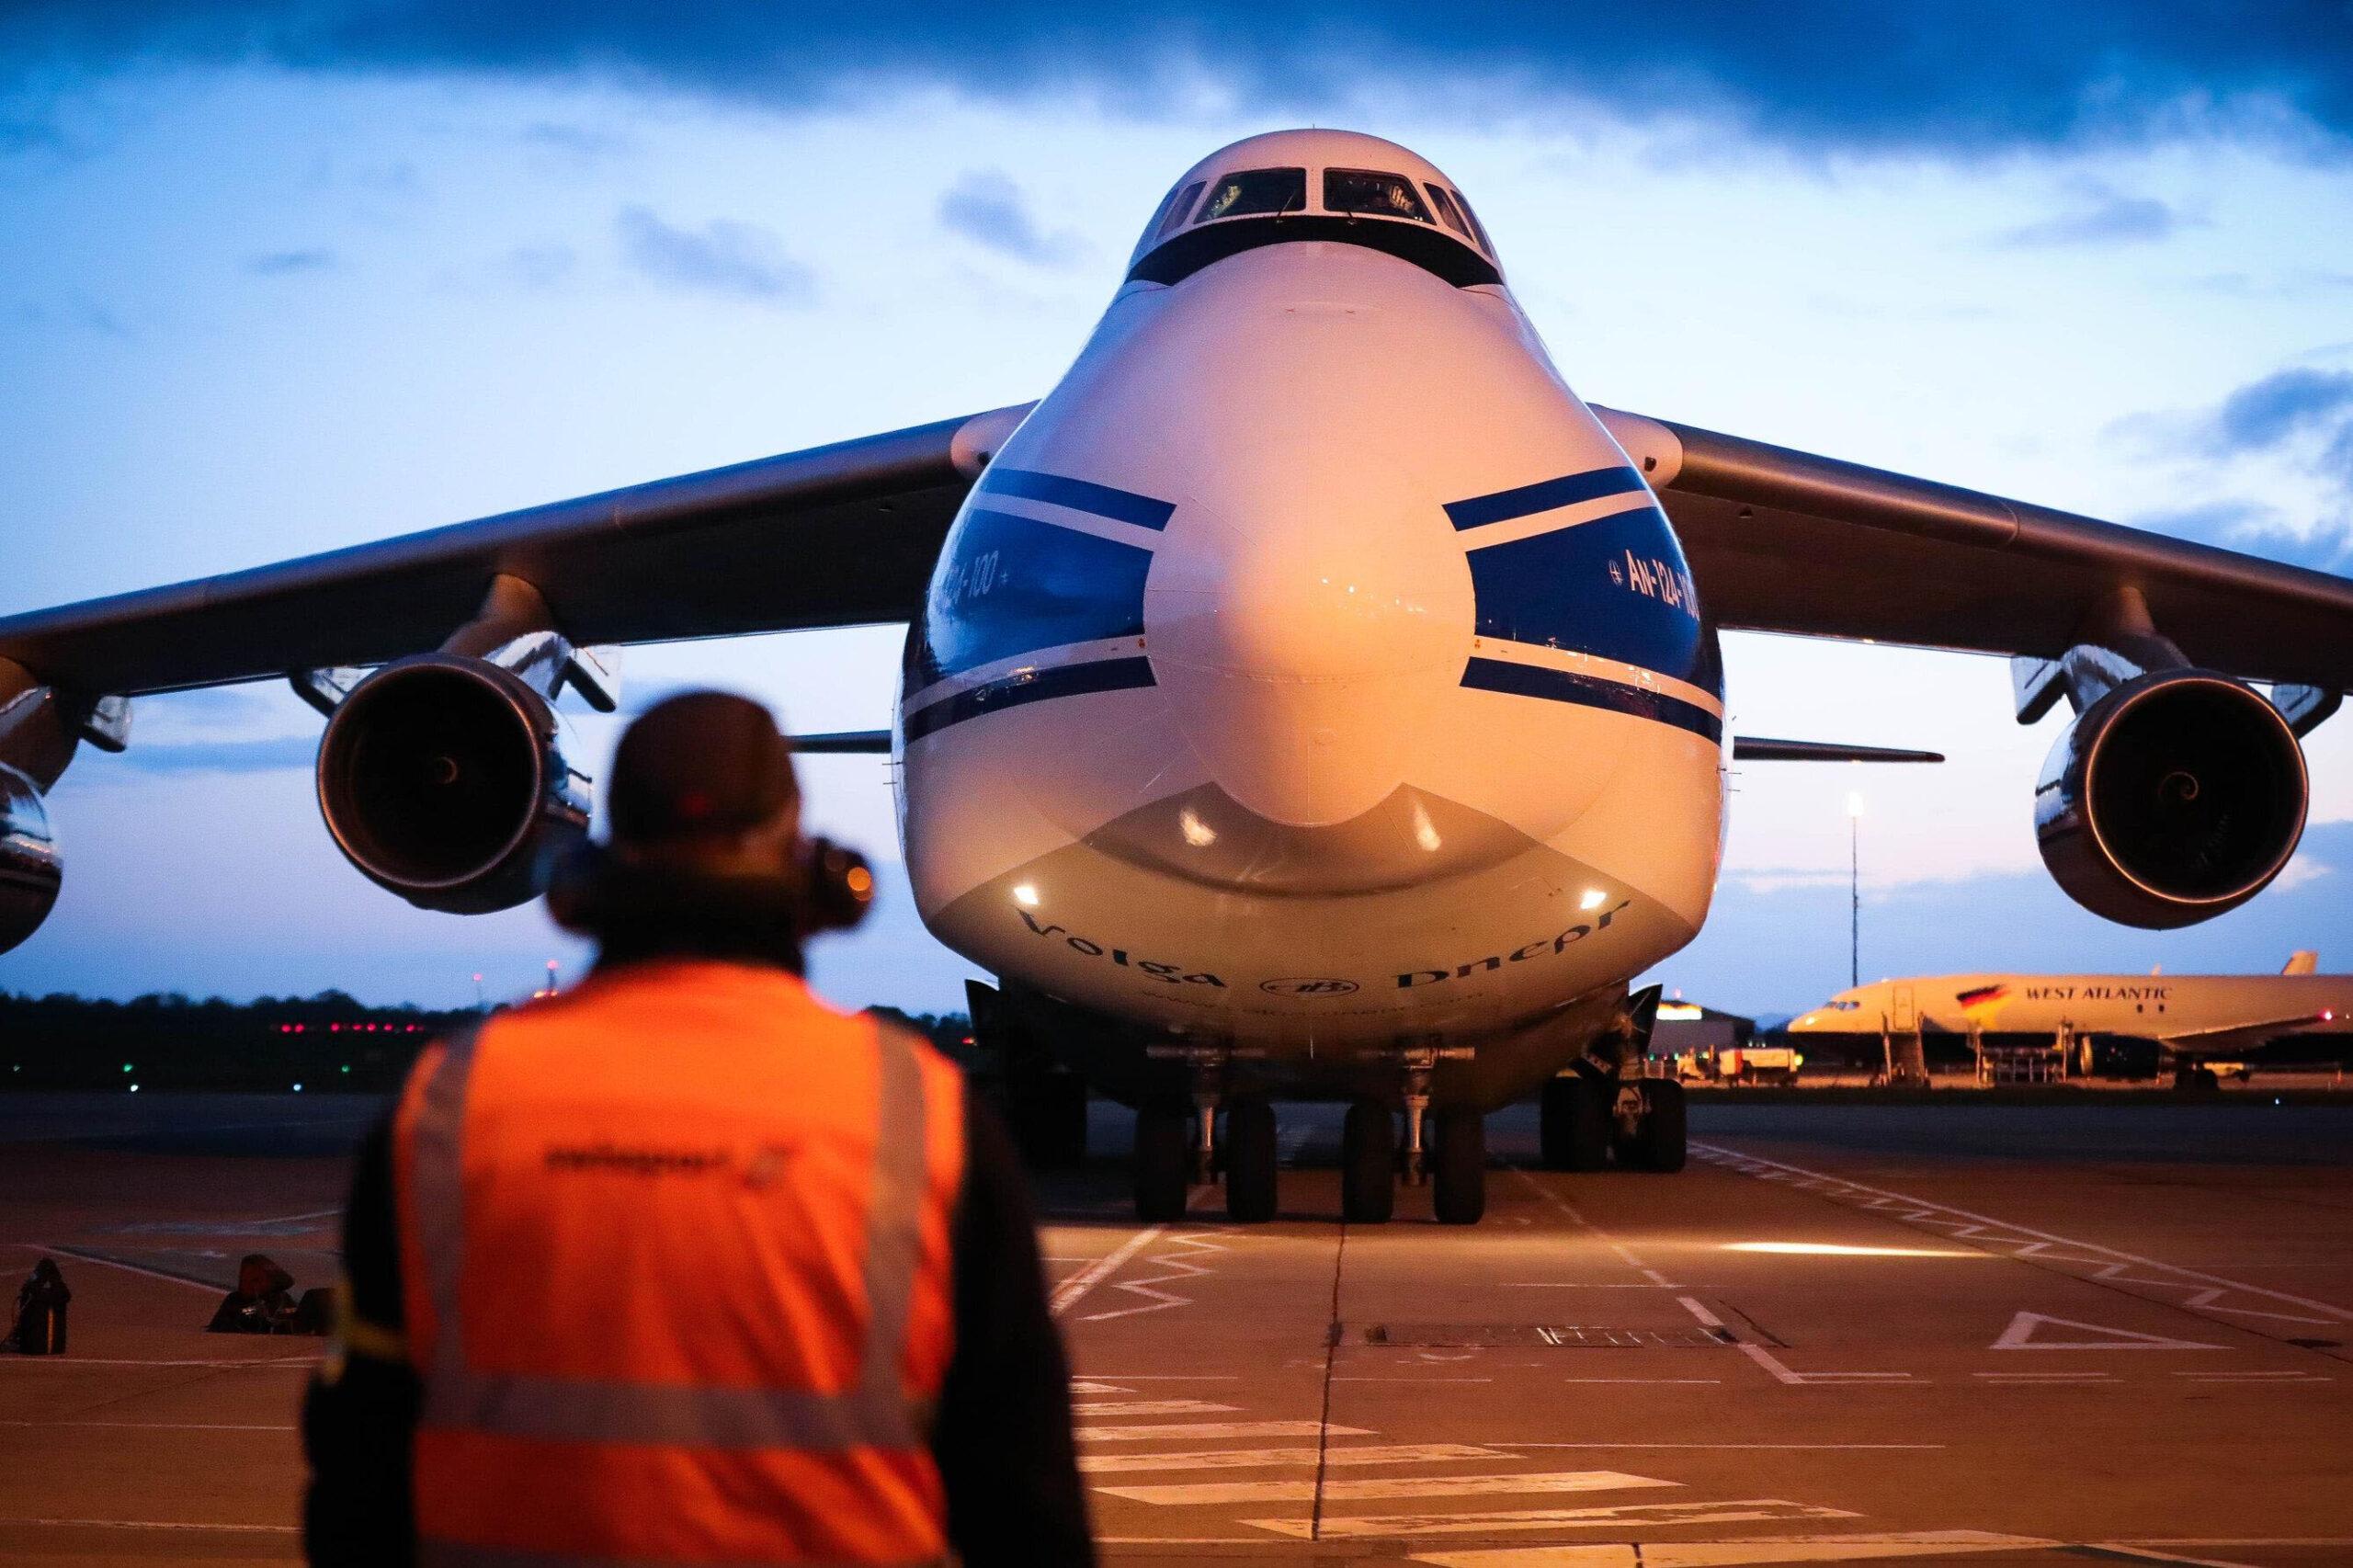 UK helping India : World's largest aircraft bringing 3 oxygen generators and 1000 ventilators